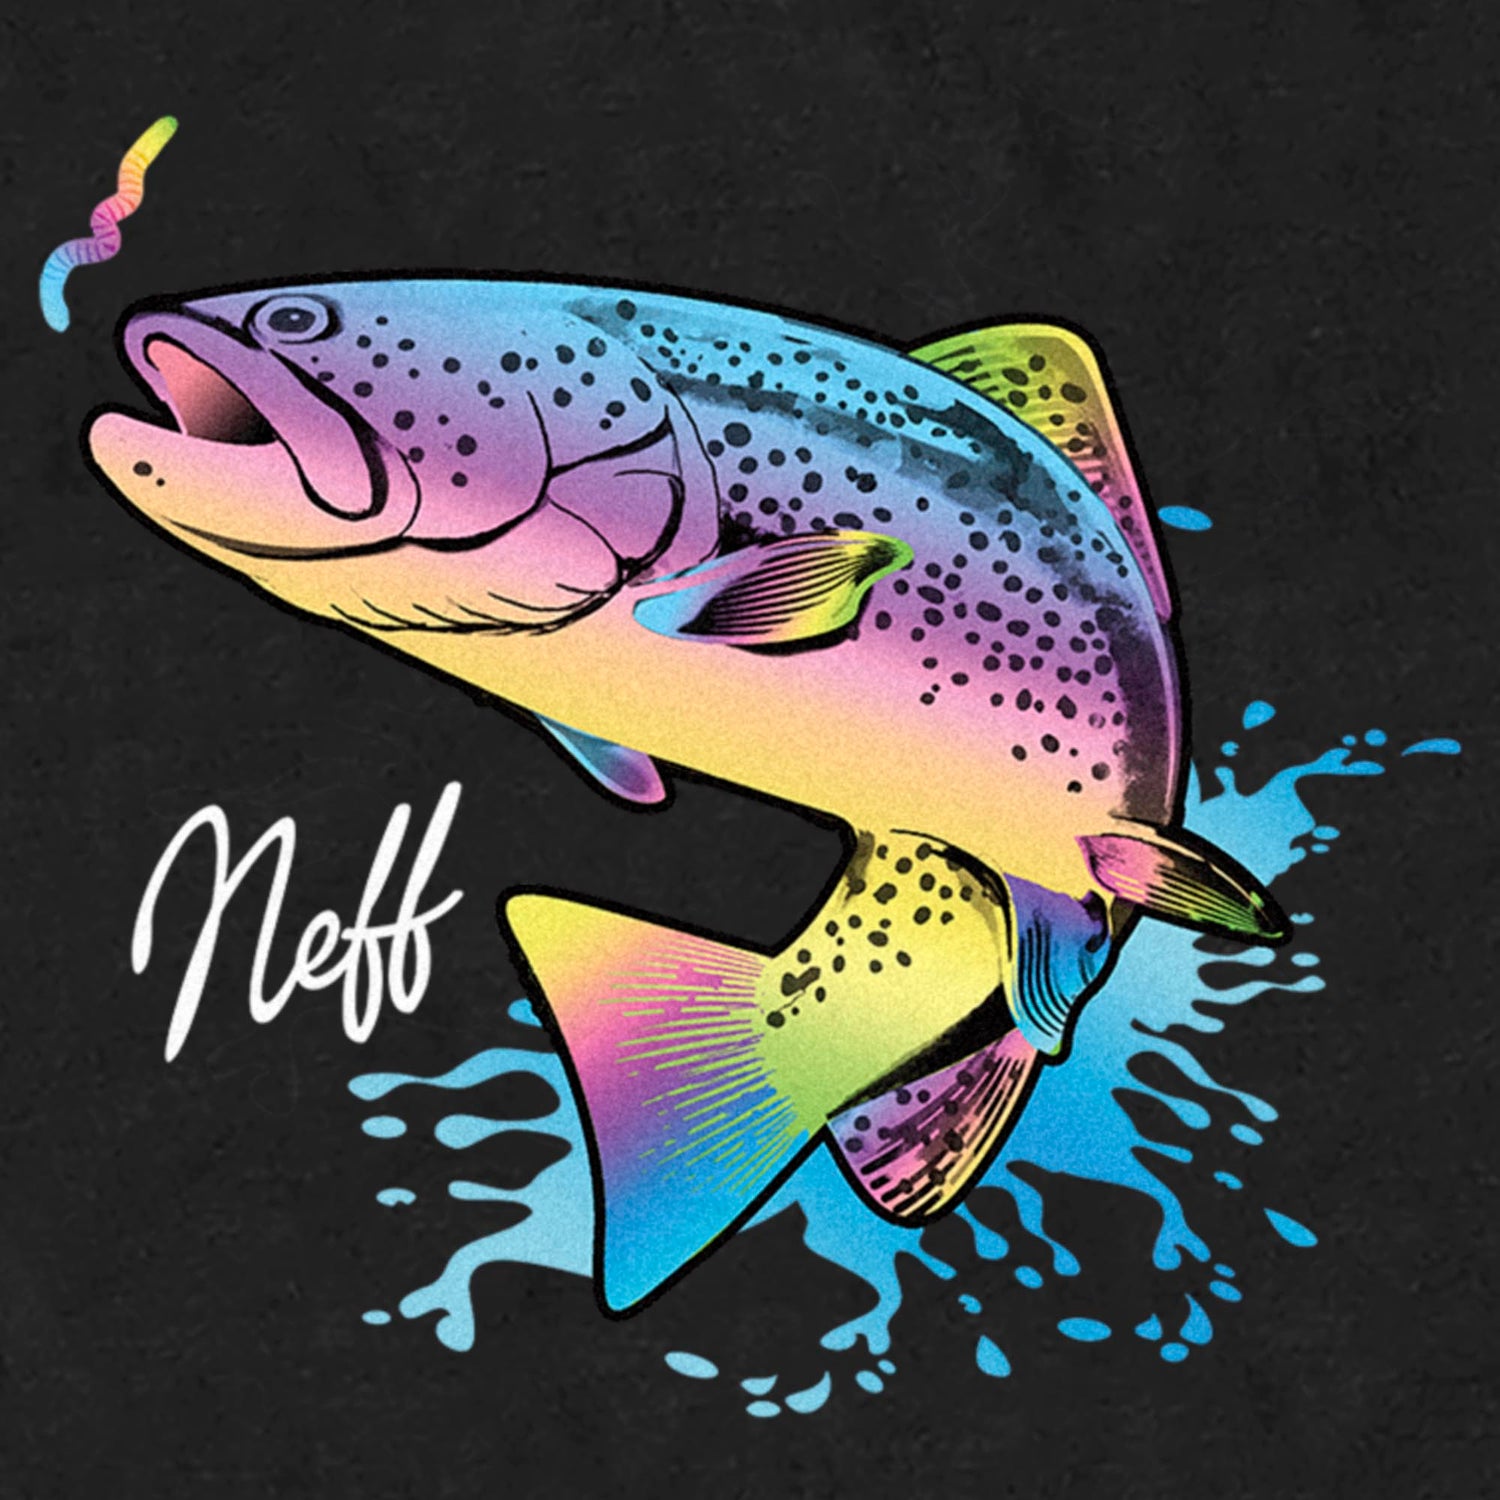 Men's NEFF Jumping Rainbow Fish T-Shirt